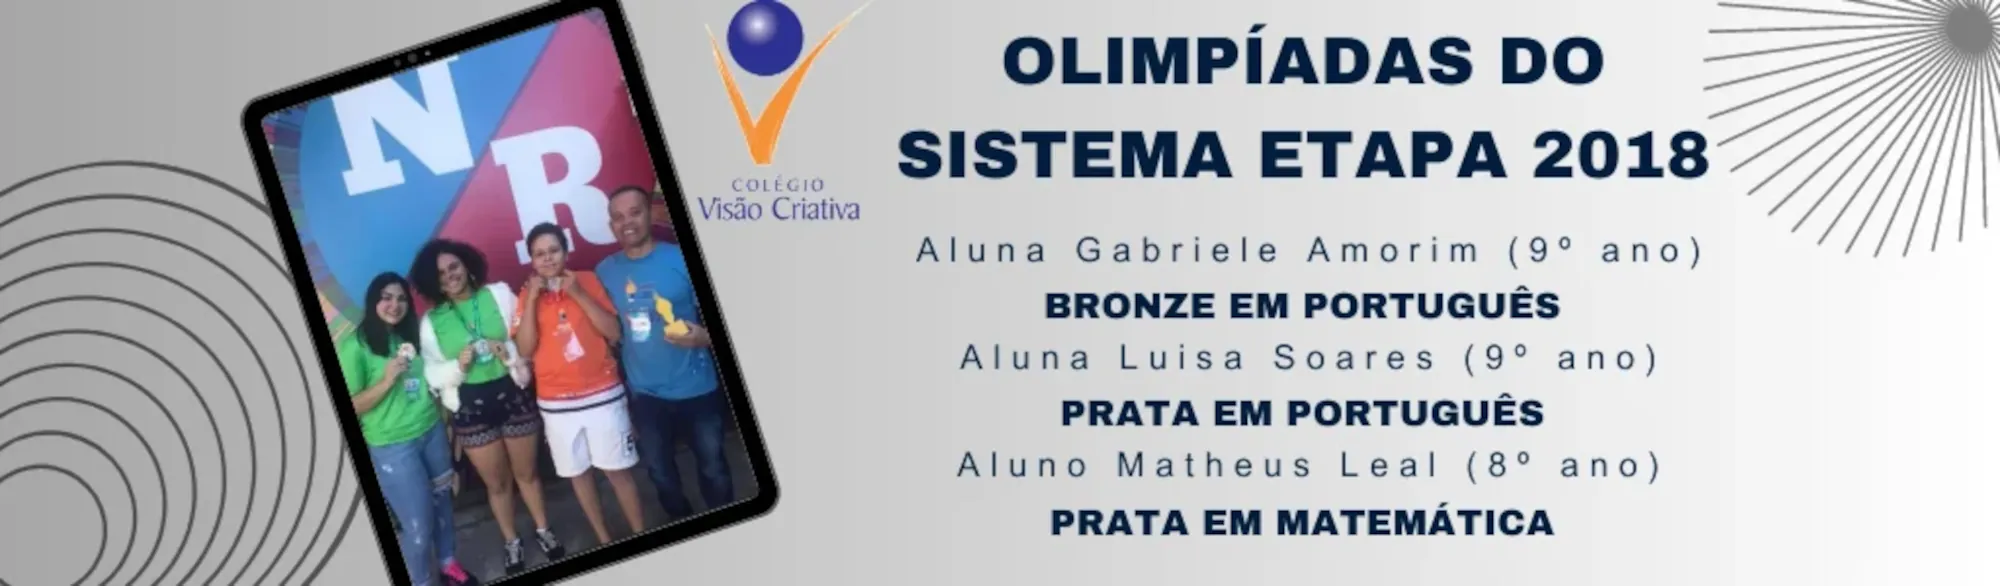 Olimpiadas-do-Sistema-Etapa-2018_A